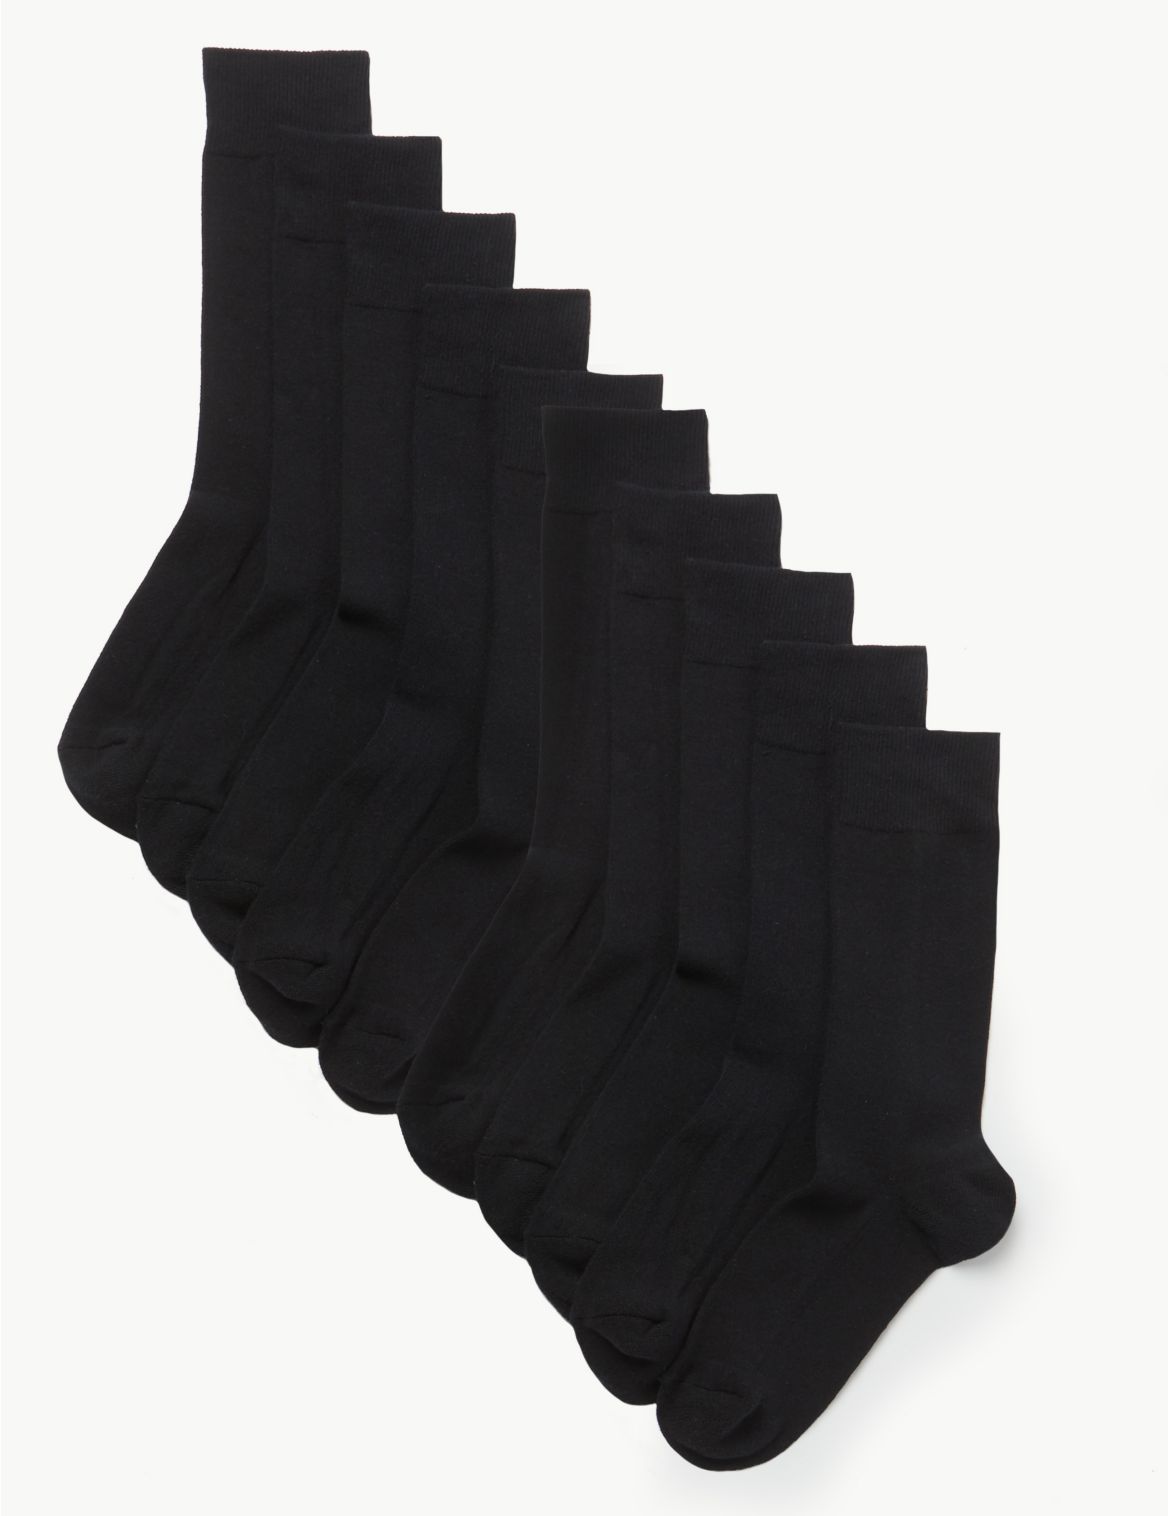 StyleProduct Style: Cool & freshfeet socks;Added stretch